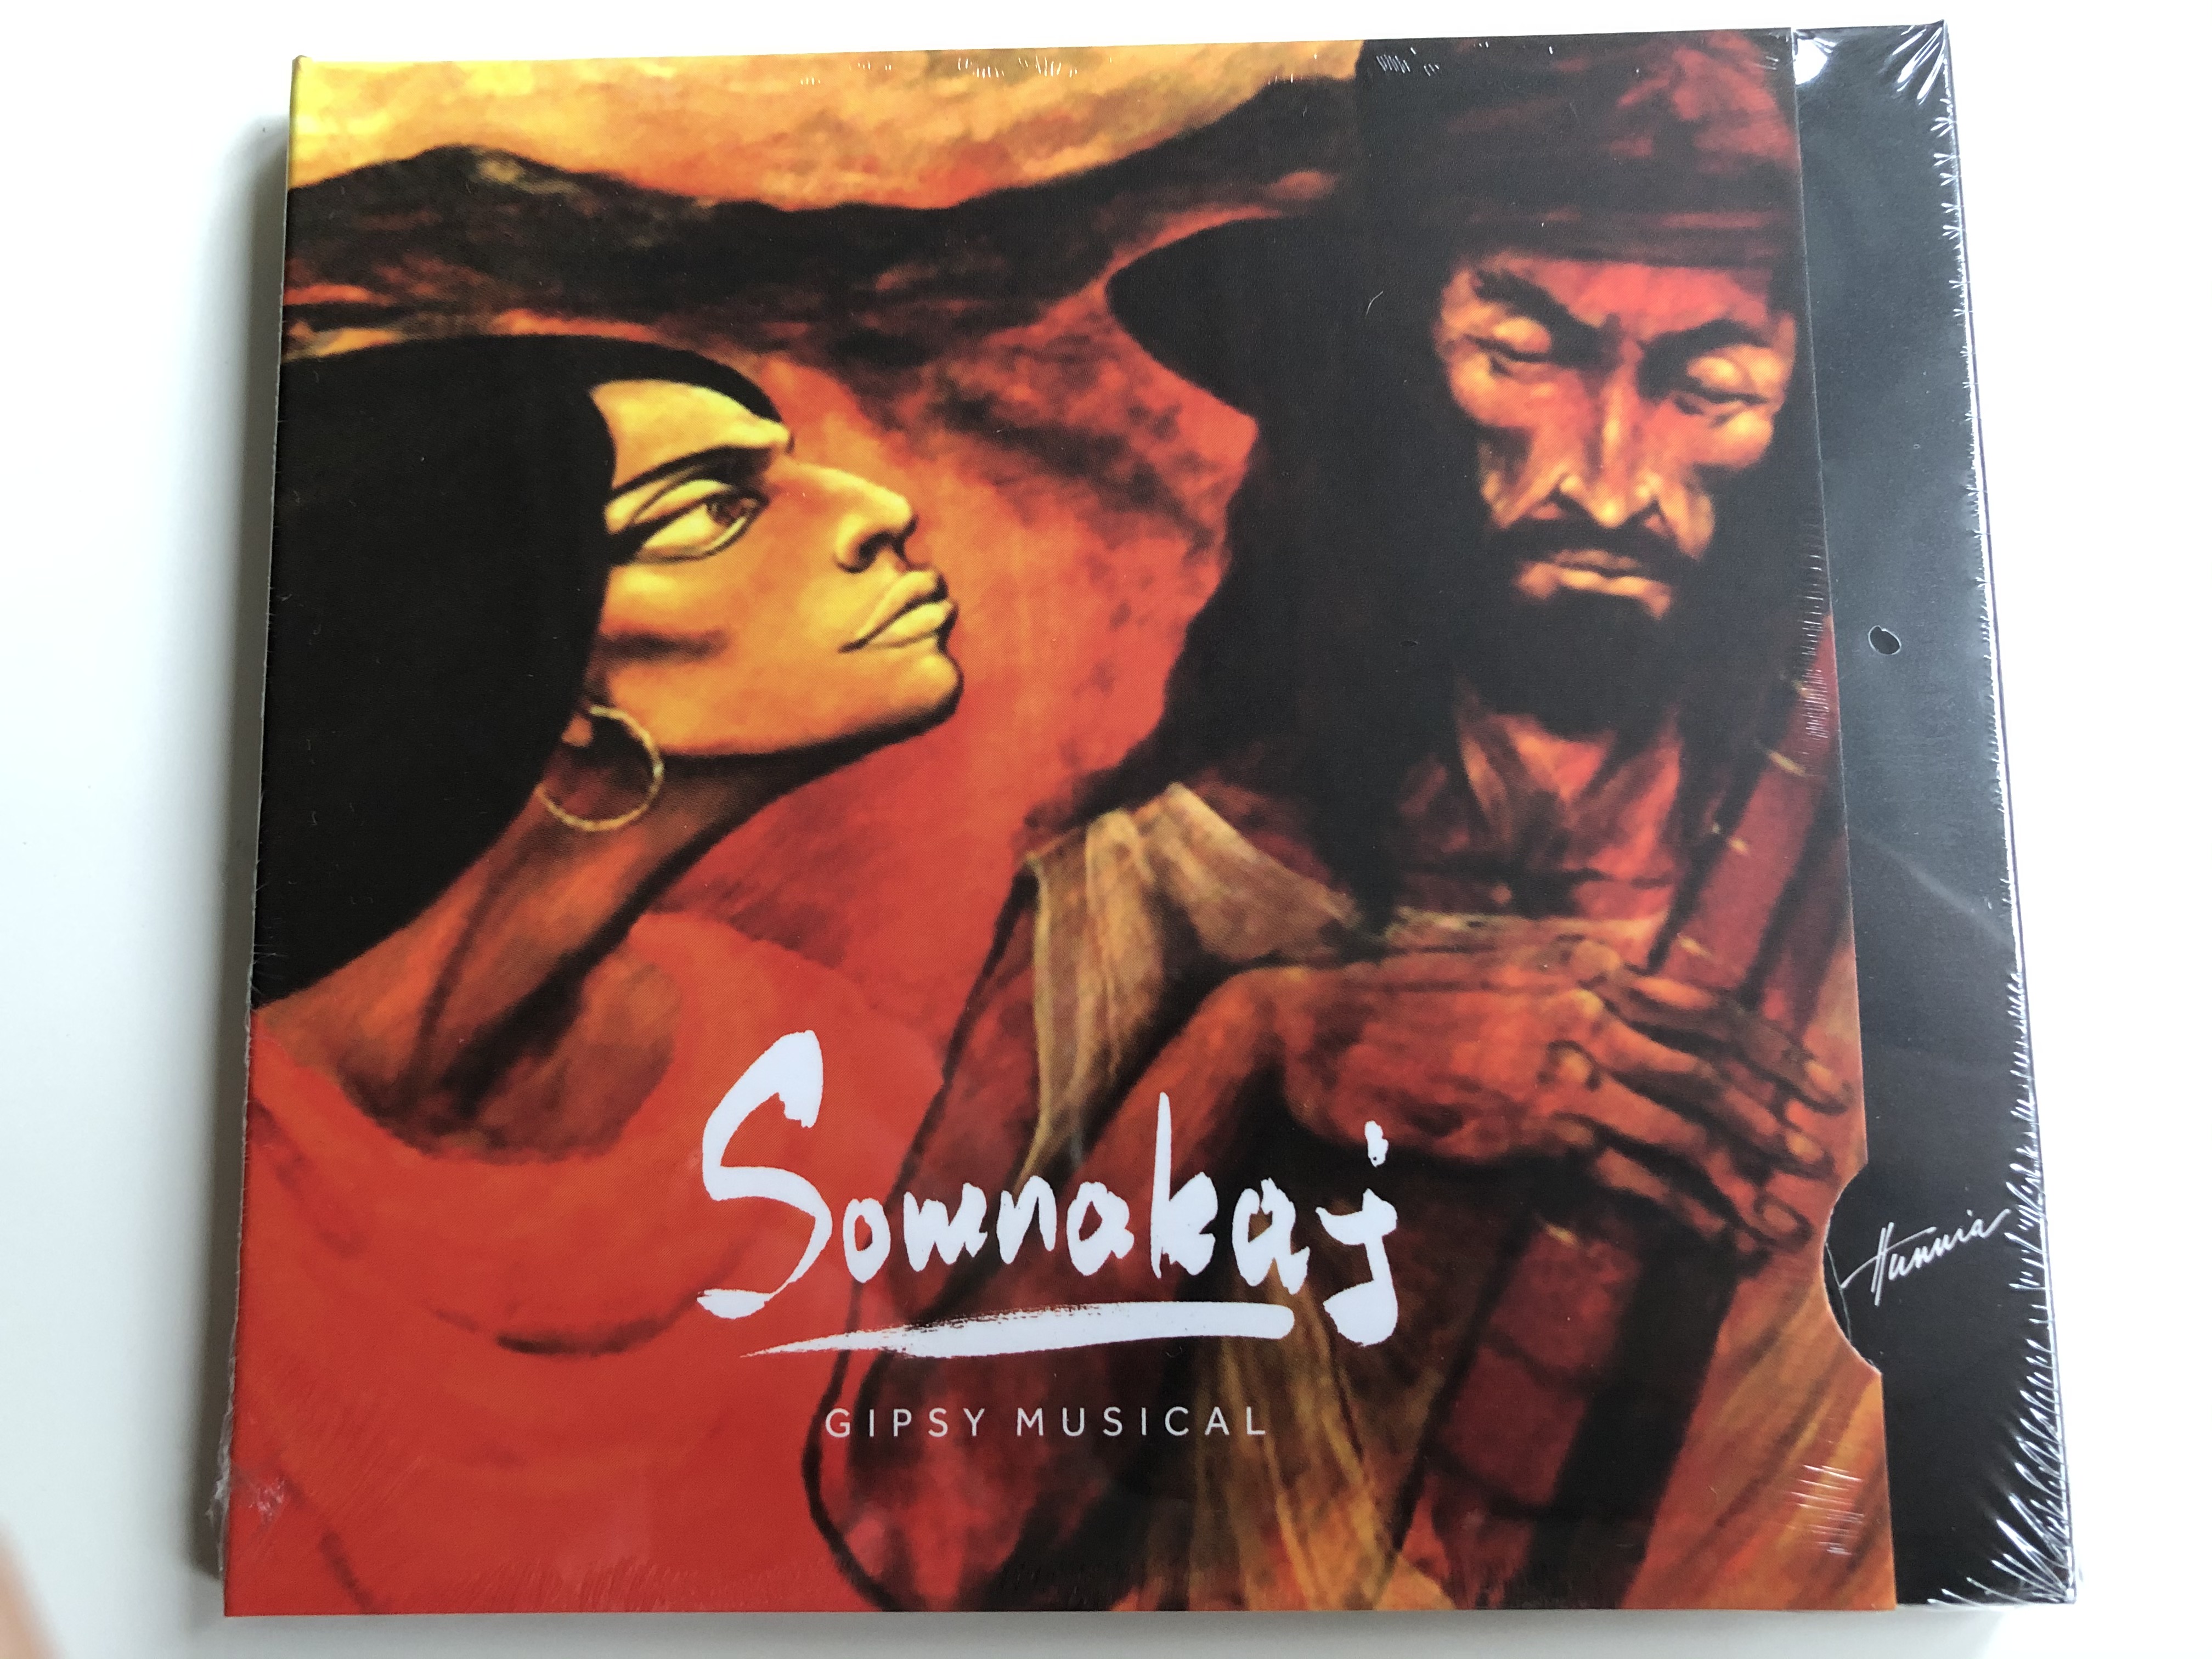 somnakaj-gipsy-musical-hunnia-records-film-production-audio-cd-2014-hrcd-1413-1-.jpg